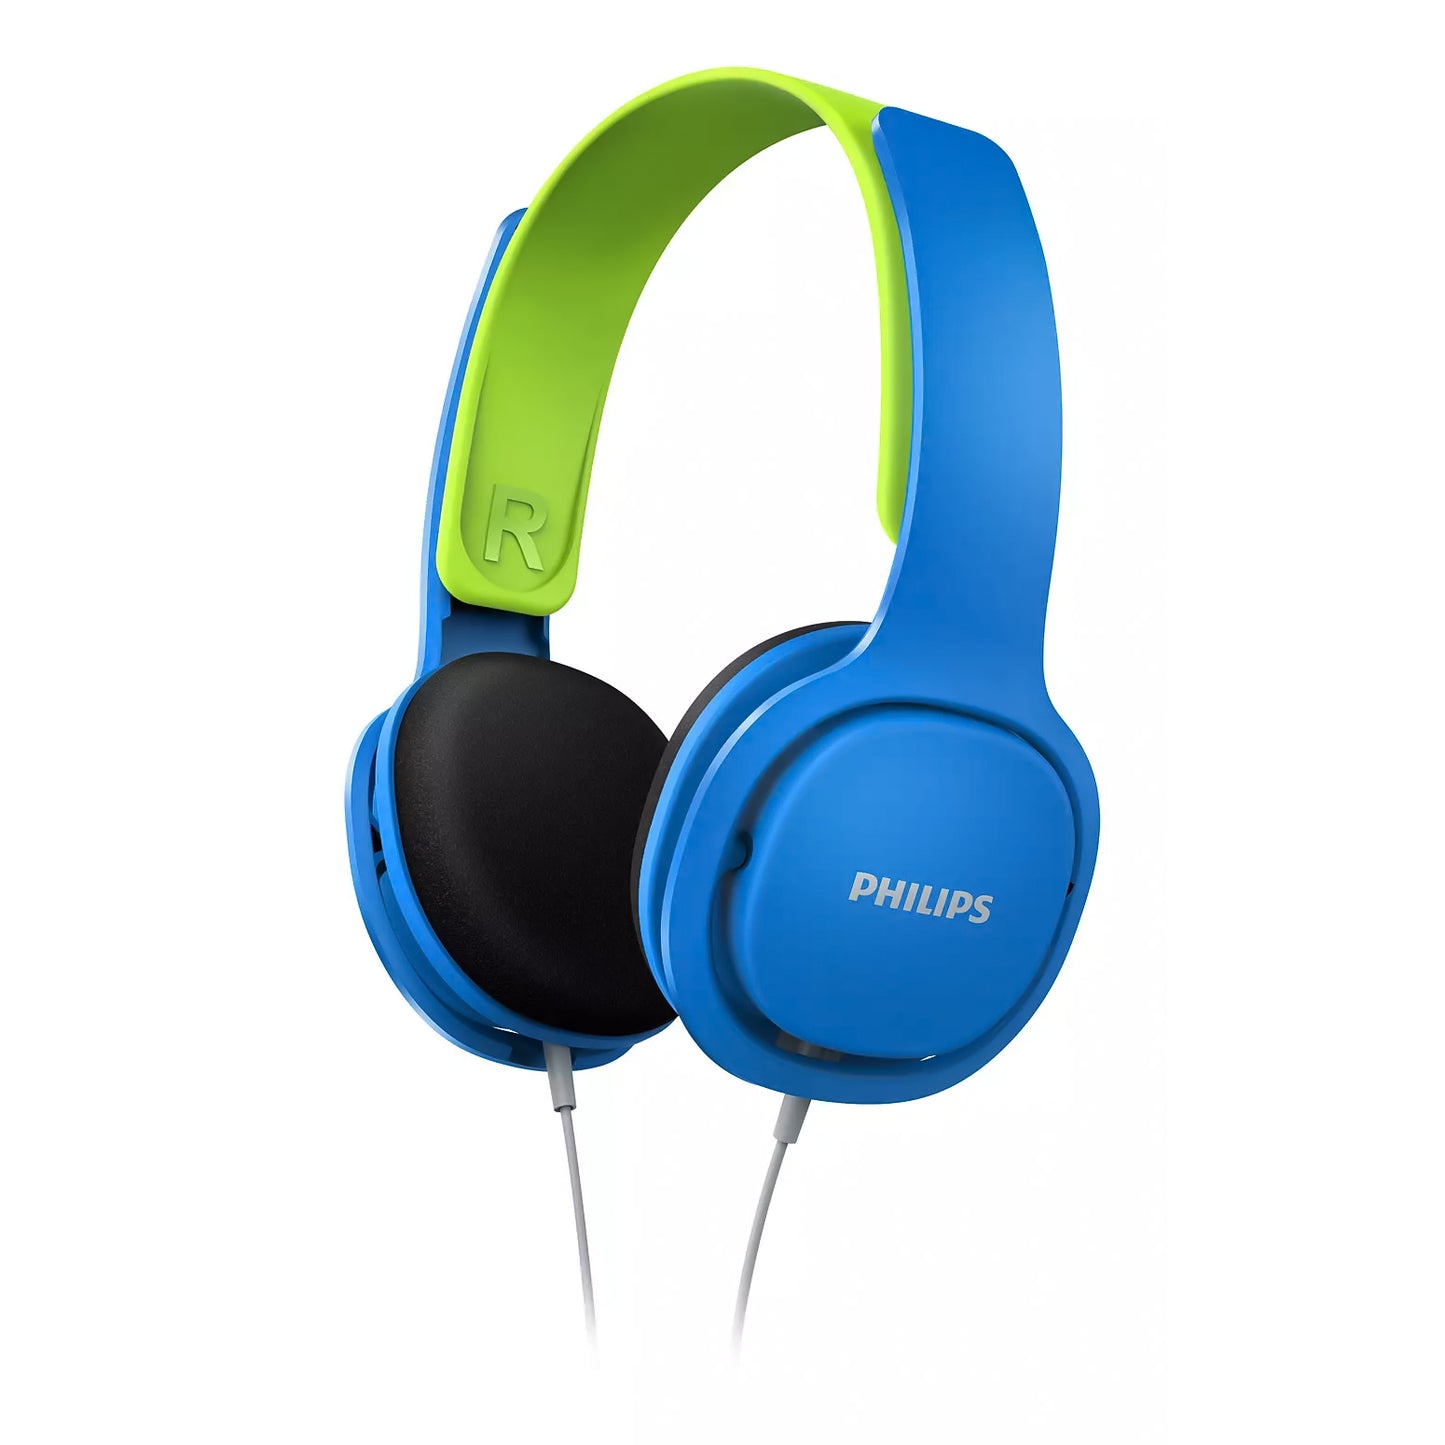 Philips SHK2000BL Over-ear children's headphones, 85 dB volume limit, noise isolation, soft ear cushions, ergonomic headband, blue